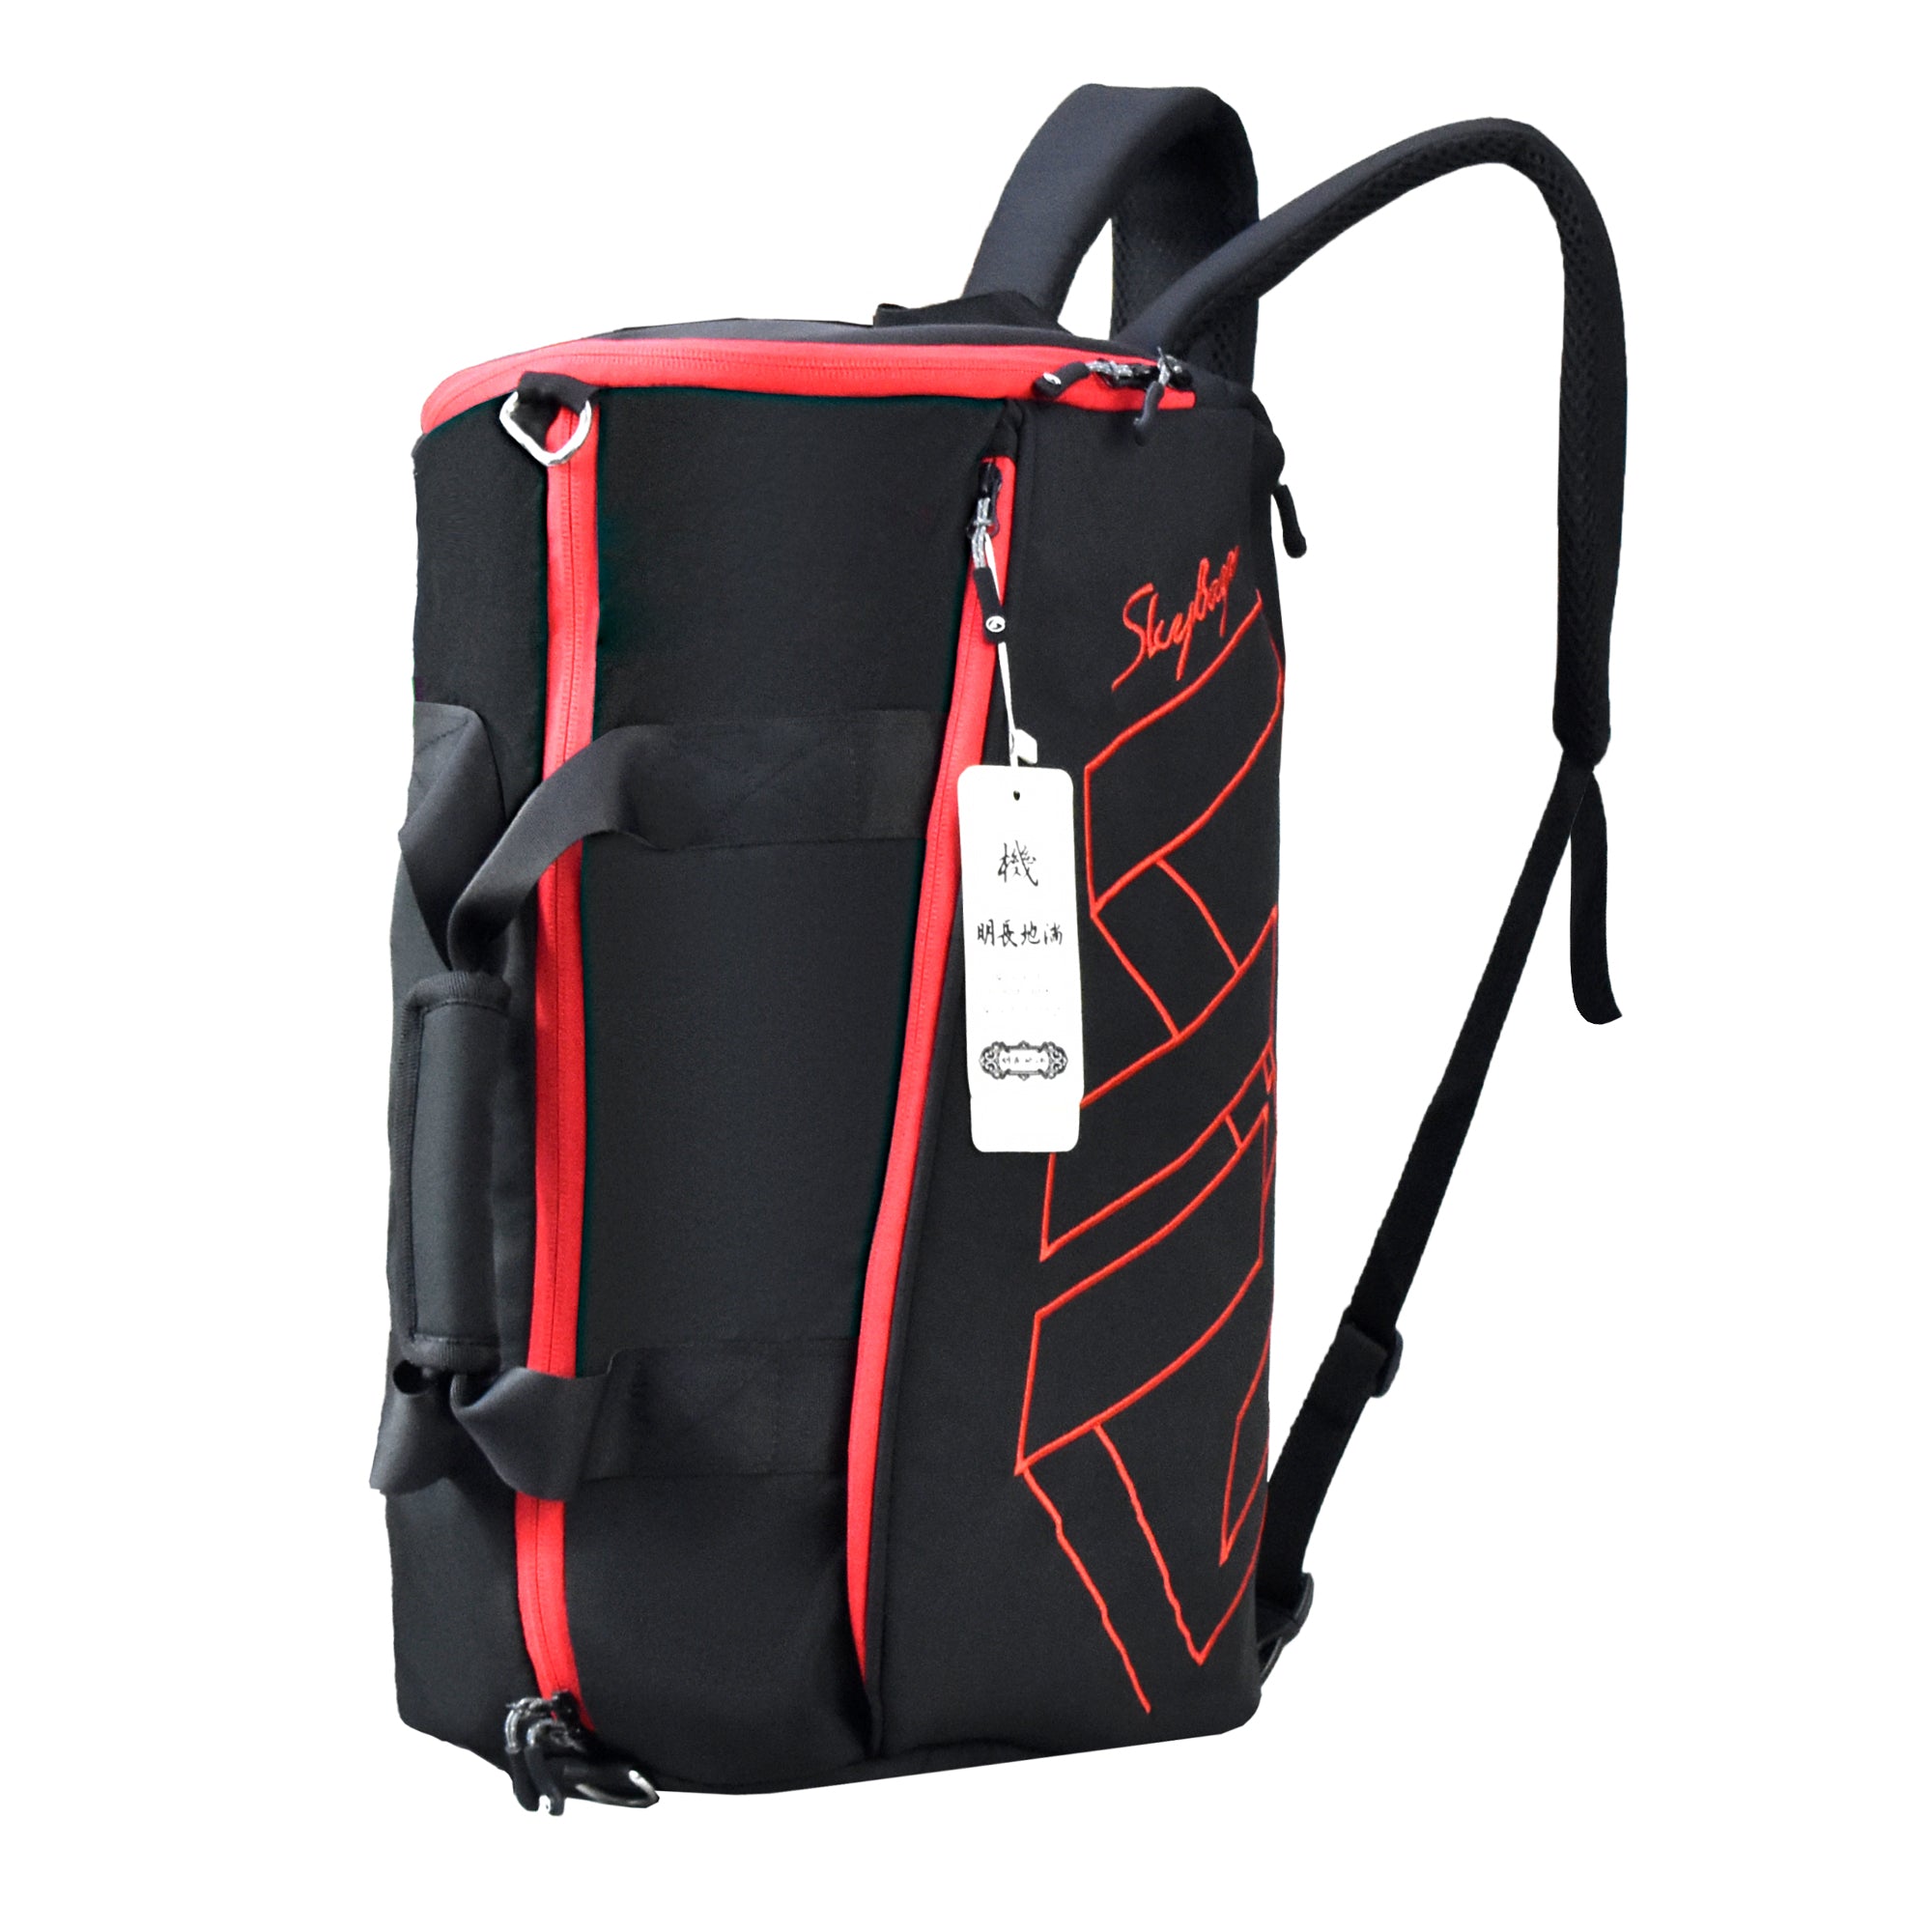 Stylish 4in1 Bag | Travel Bag | Gym Bag | Carry Shoe |  Bag 31